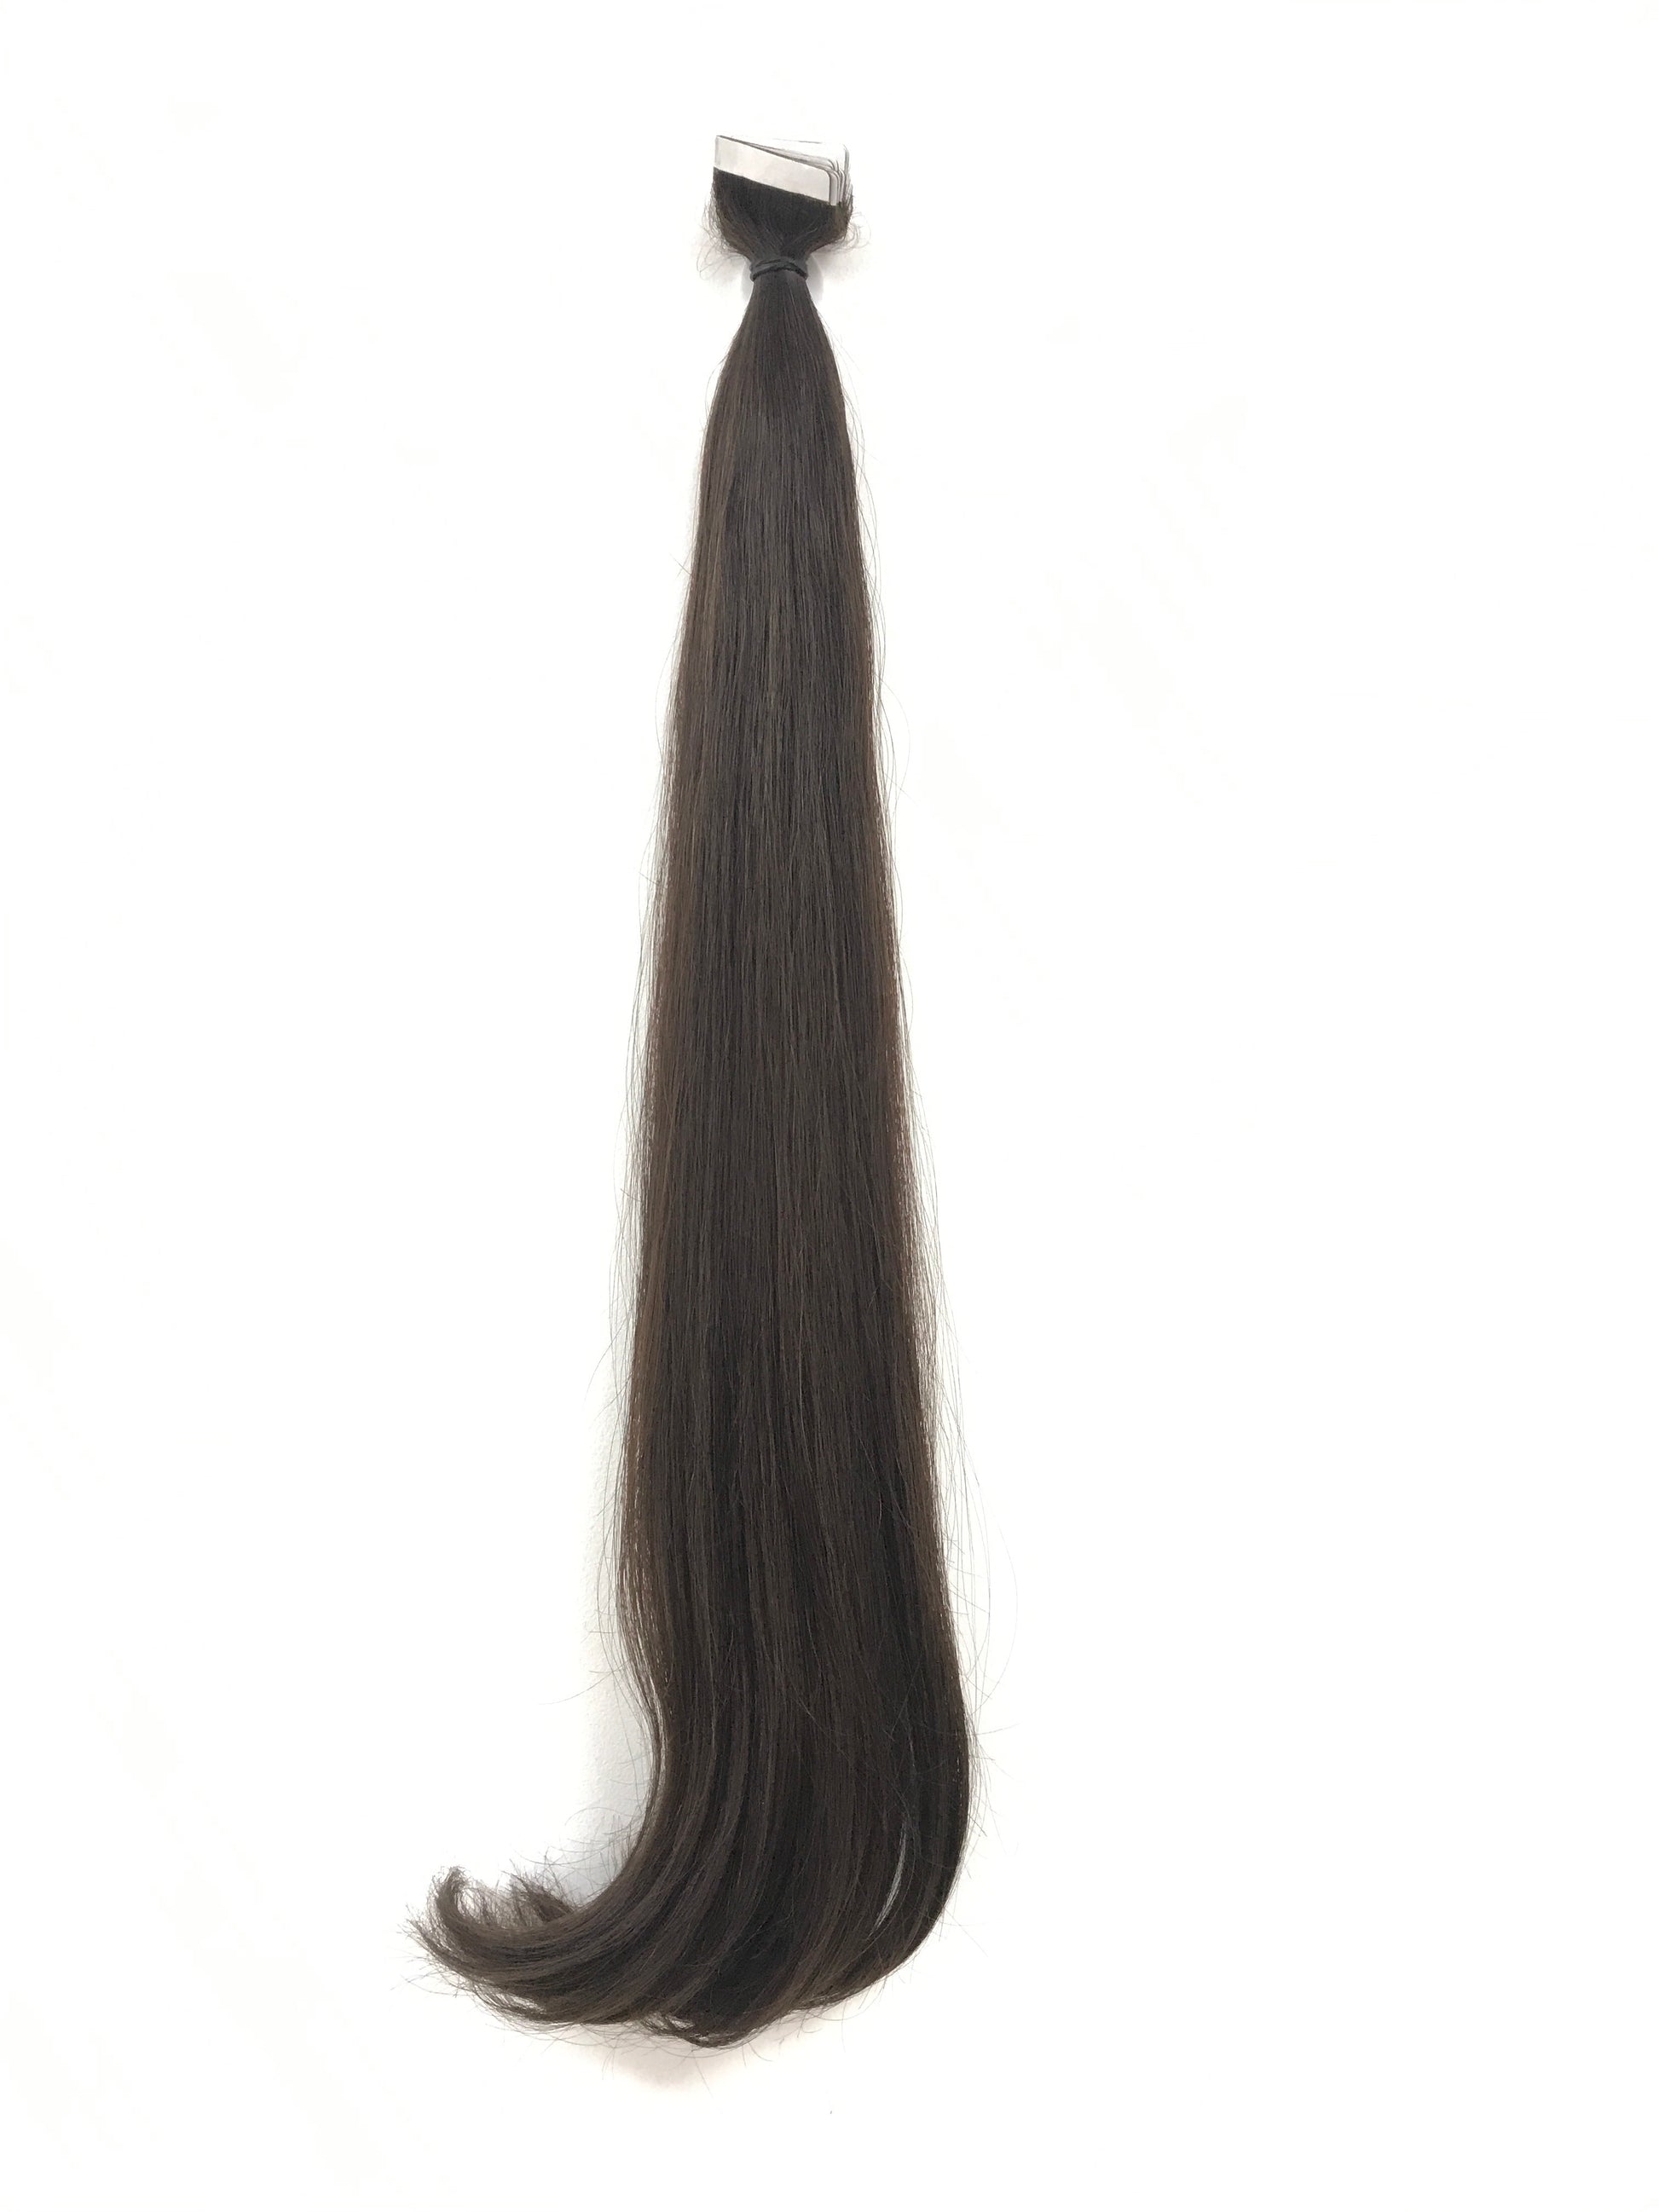 Brazilian Virgin Remy Human Hair, Tape Extensions, Straight, 18'', Medium Brown. Quick Shipping!-Virgin Hair & Beauty, The Best Hair Extensions, Real Virgin Human Hair.